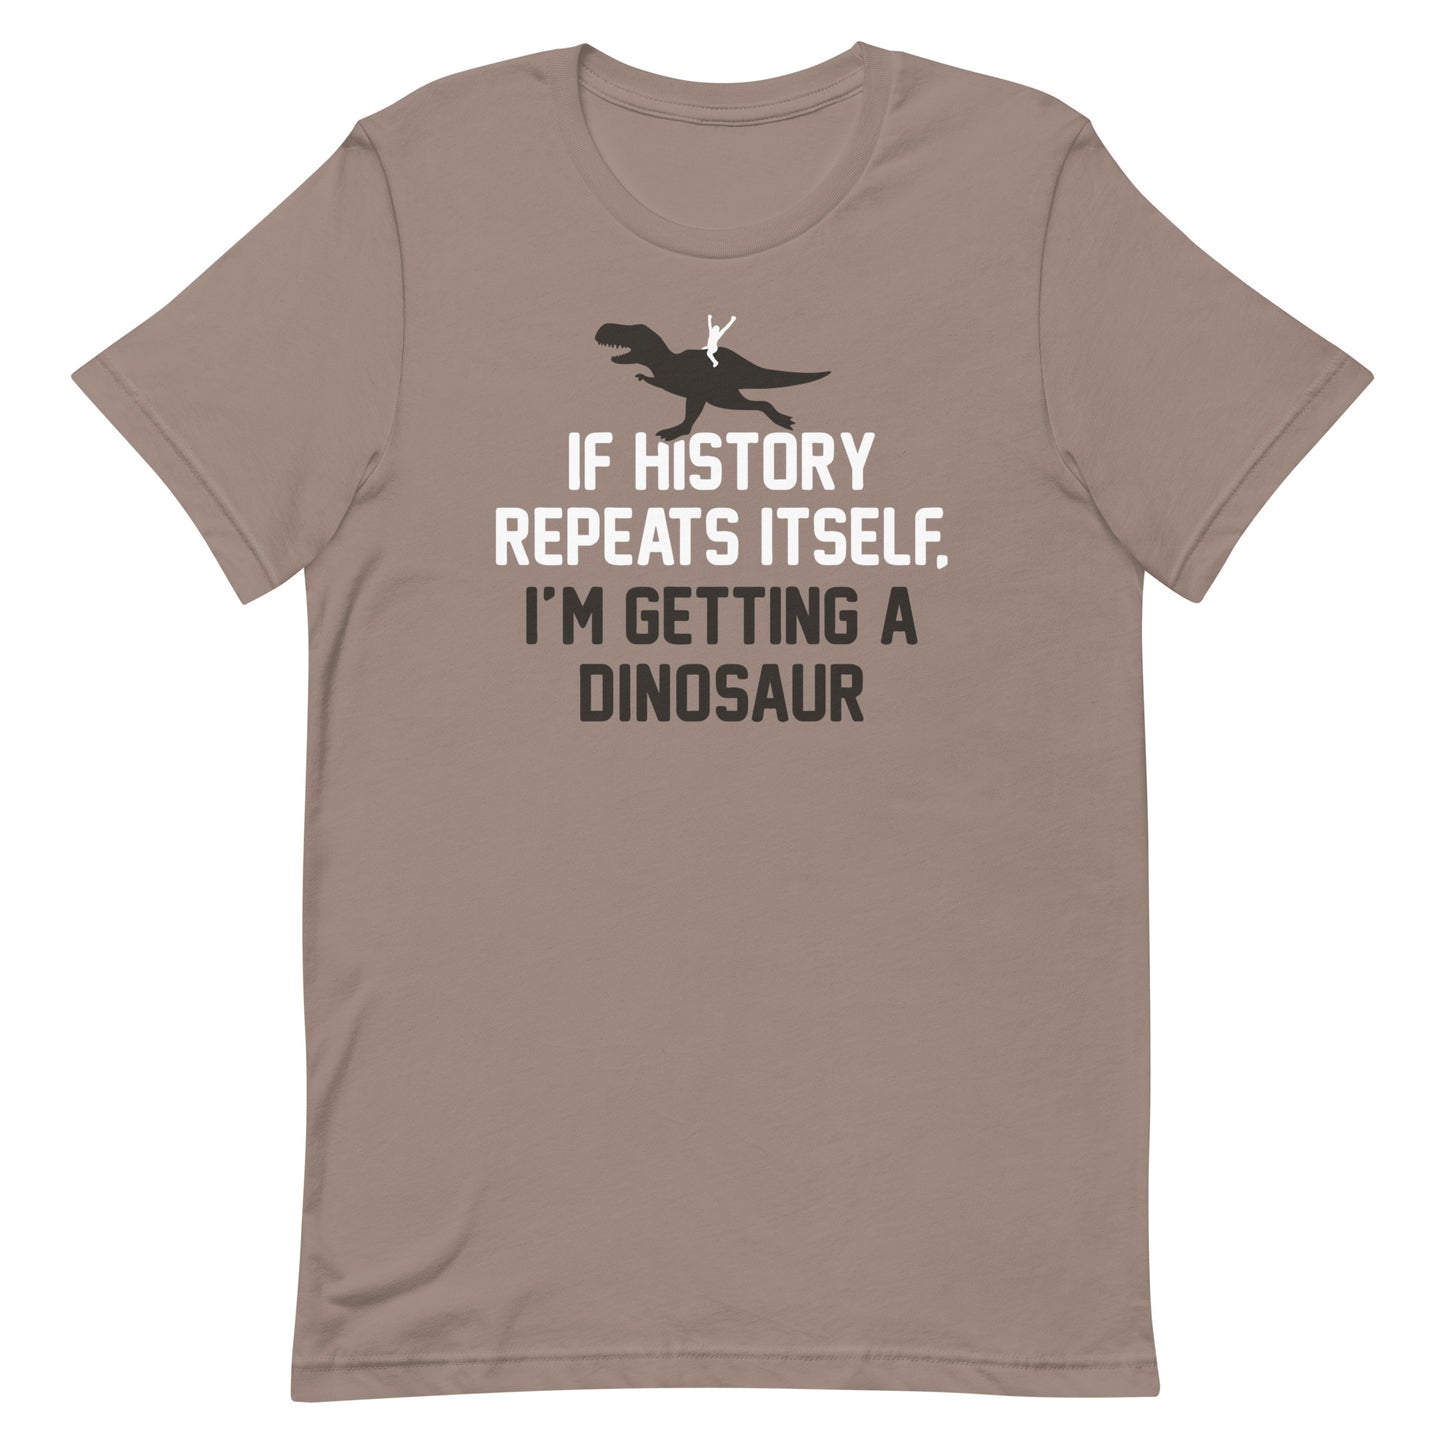 If History Repeats Itself, I'm Getting A Dinosaur Men's Signature Tee